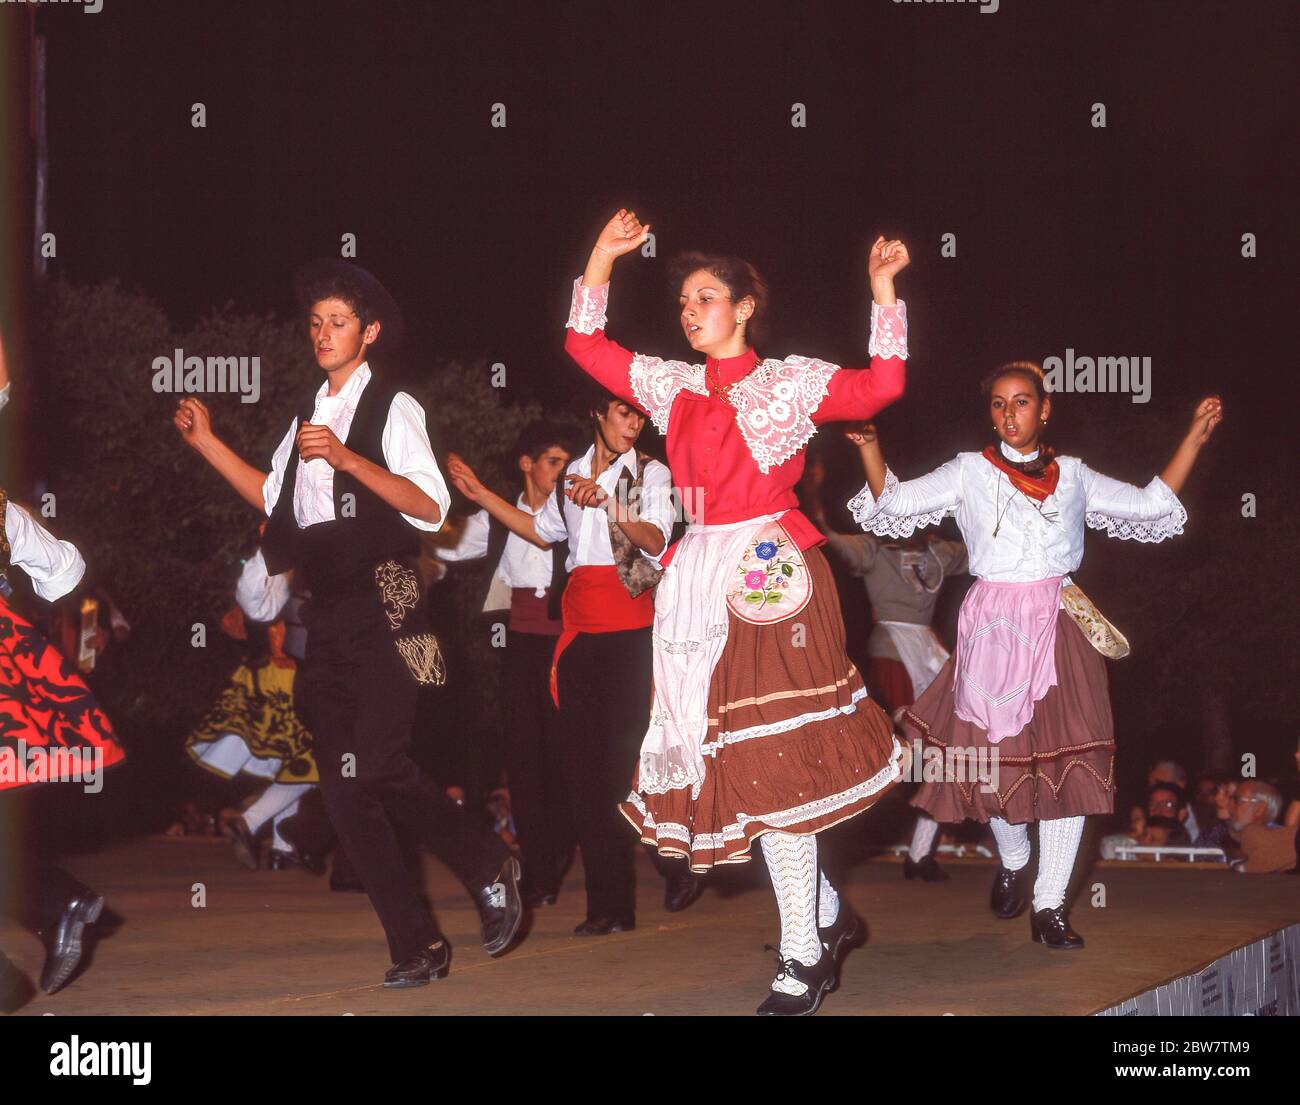 Young dancers performing in outdoor venue, Albufeira, Algarve Region, Portugal Stock Photo